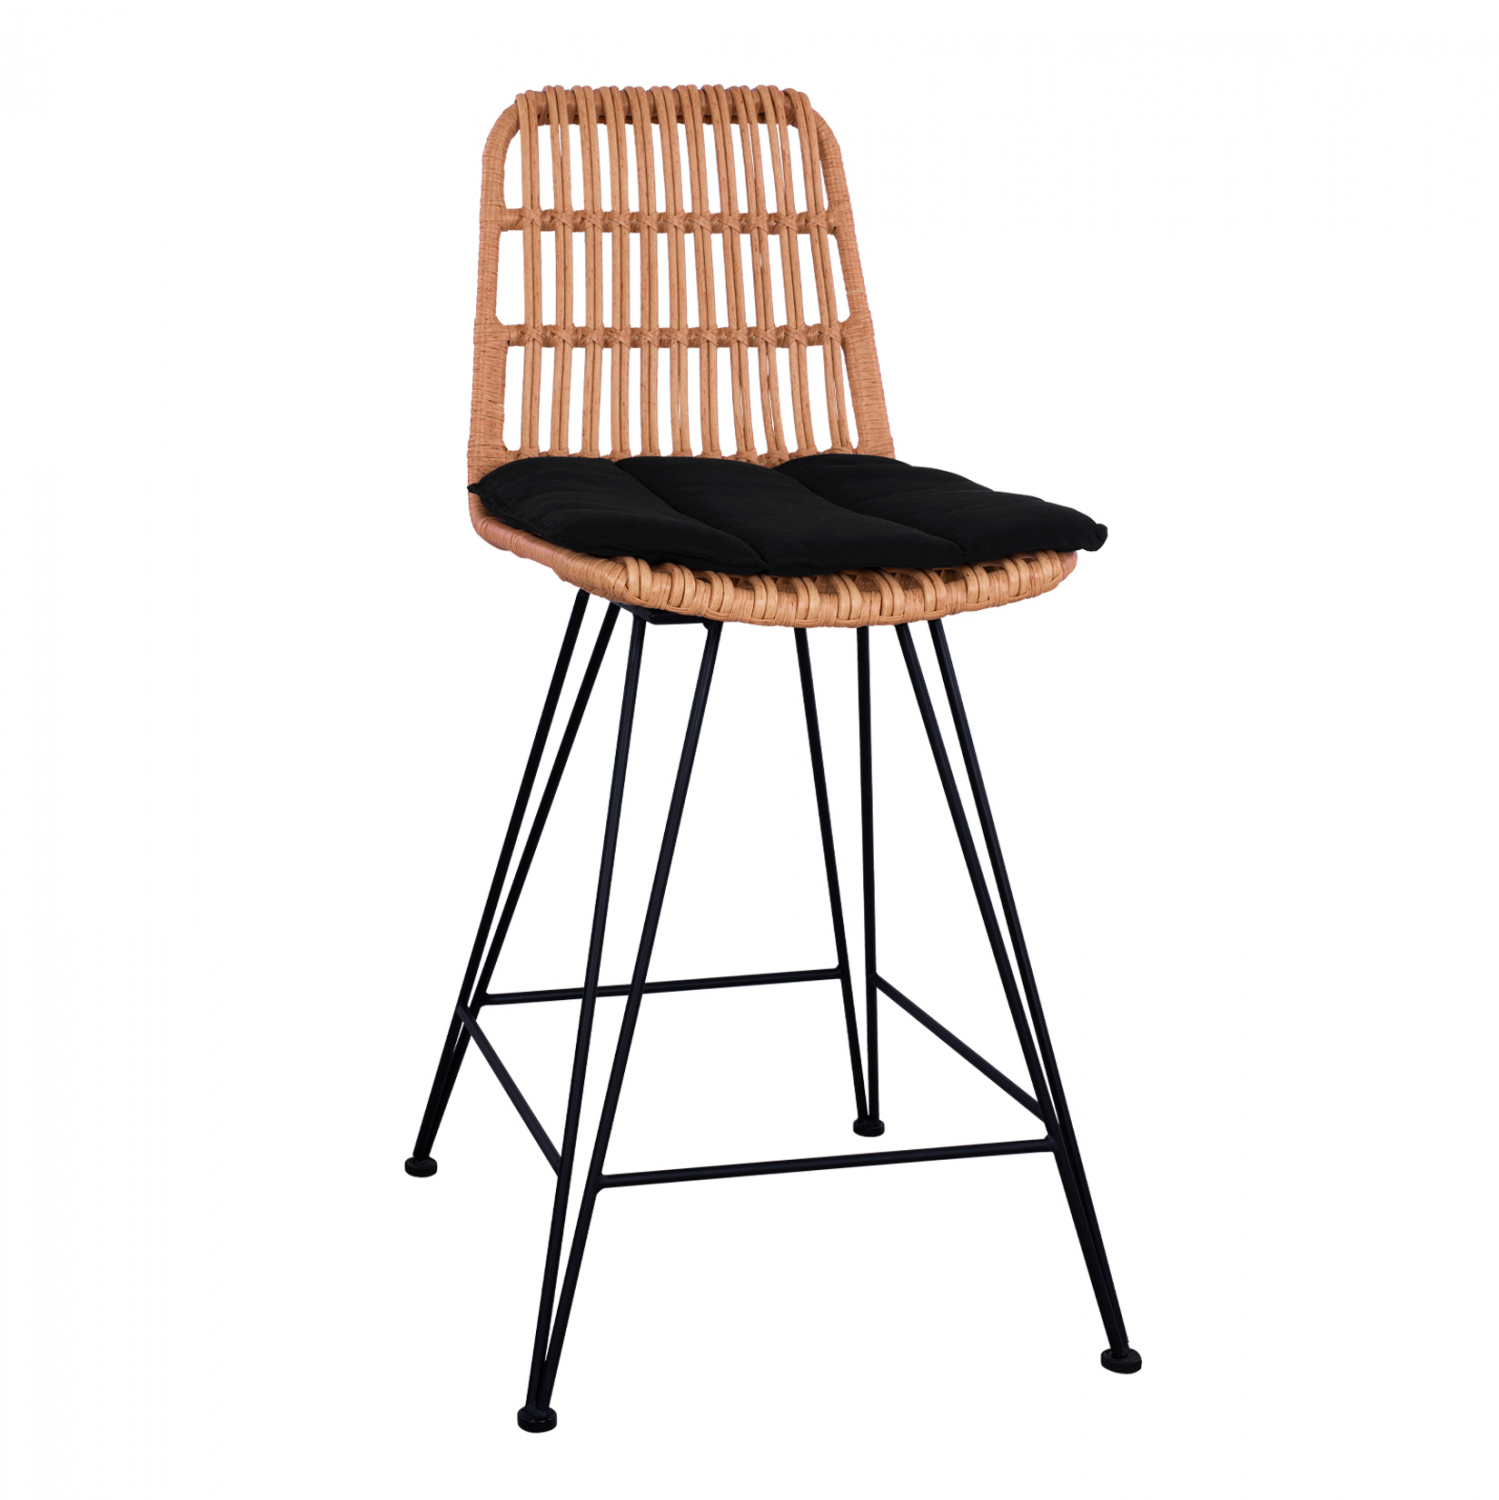 Бар стол средна височина  бежово-черен цвят